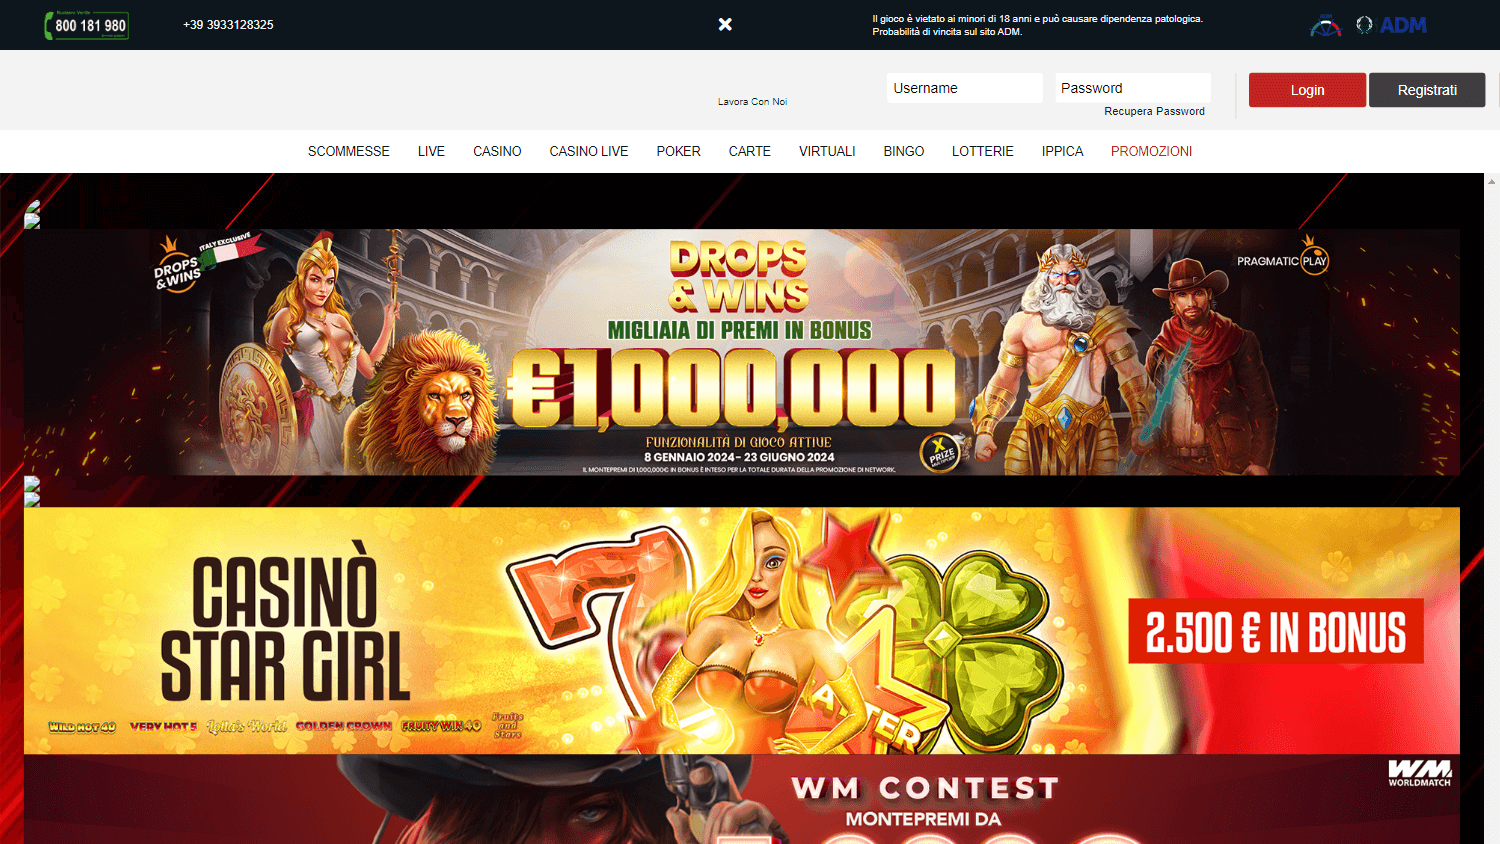 domusbet_casino_promotions_desktop